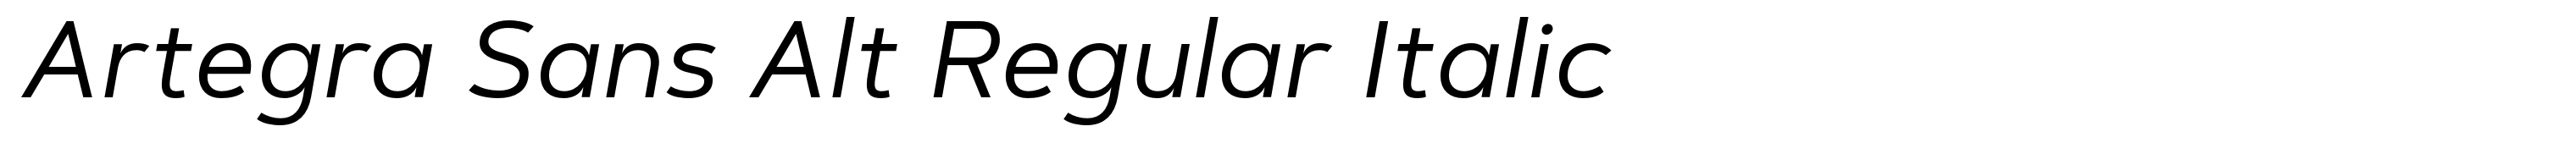 Artegra Sans Alt Regular Italic